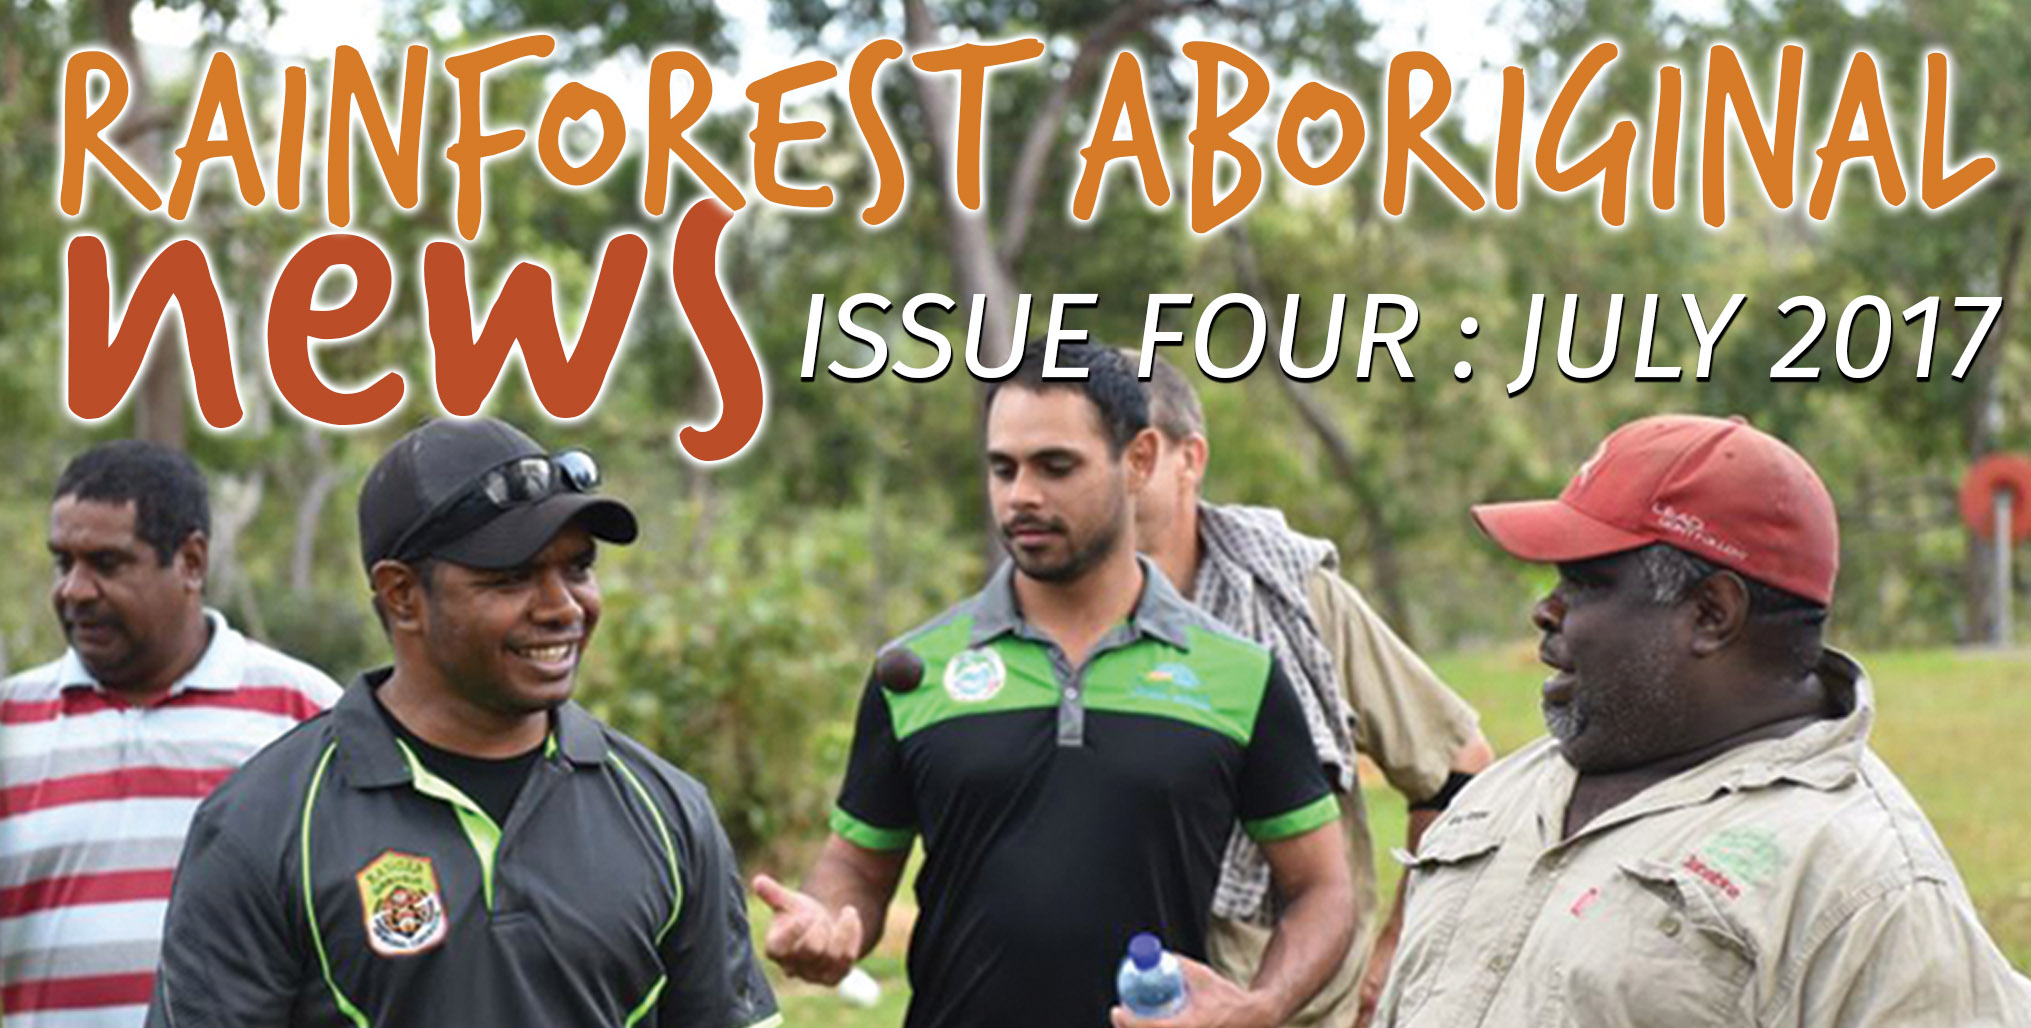 Rainforest Aboriginal News March 2018
Photographer: Wet Tropics Management Authority